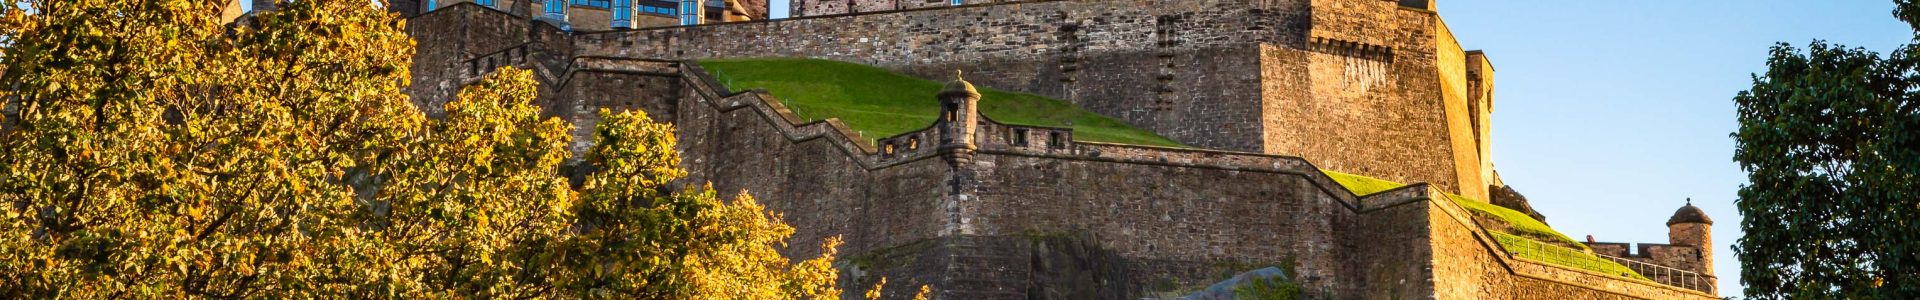 Edinburgh Castle from Princes Street Gardens, Edinburgh, Scotland. ED022